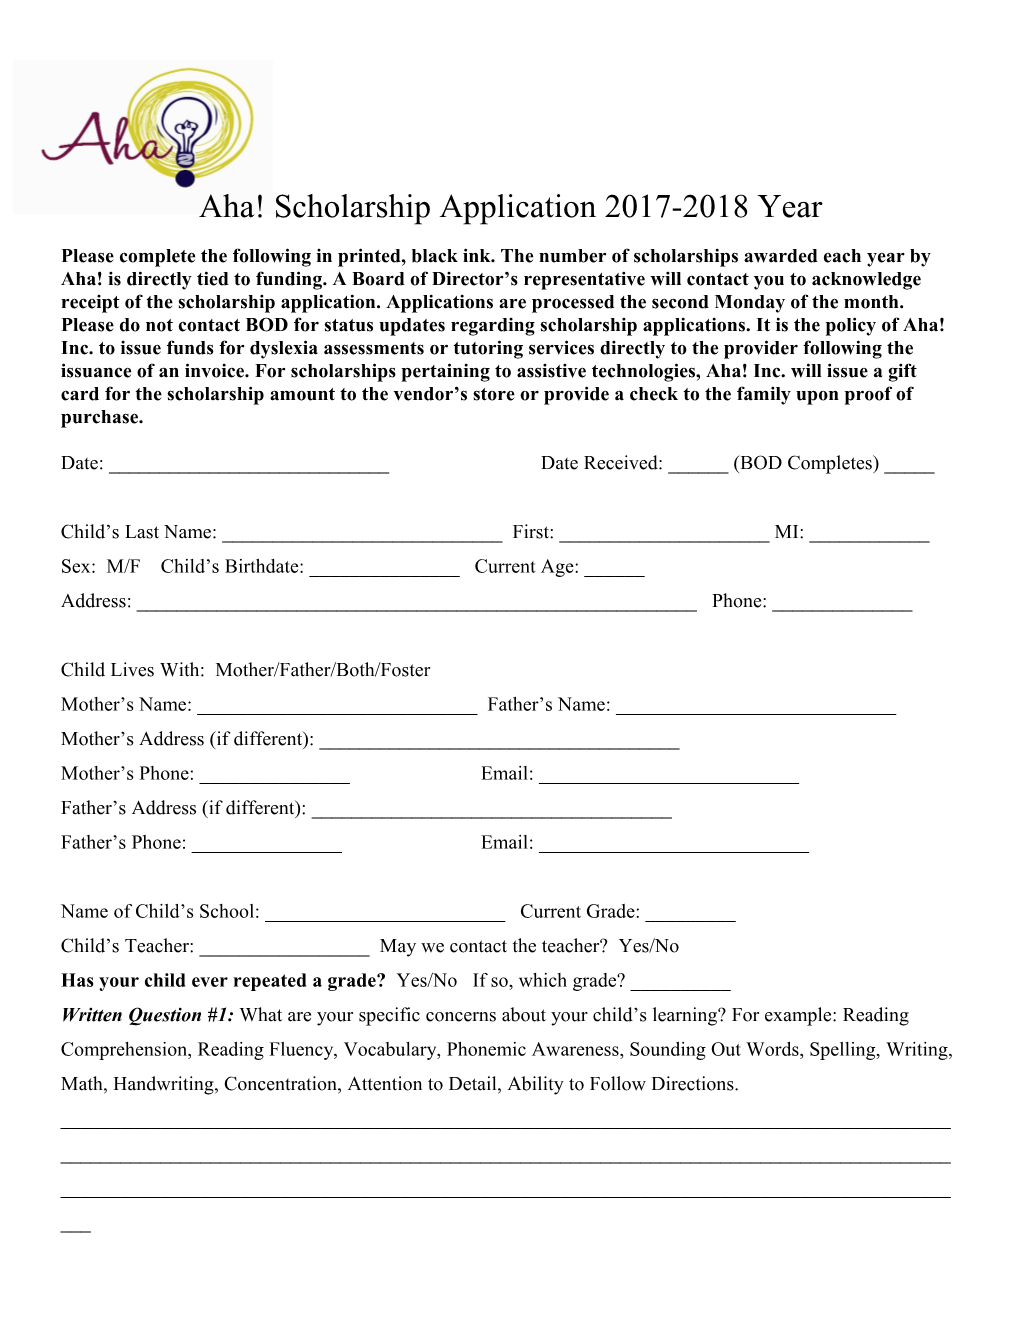 Aha! Scholarship Application 2017-2018 Year